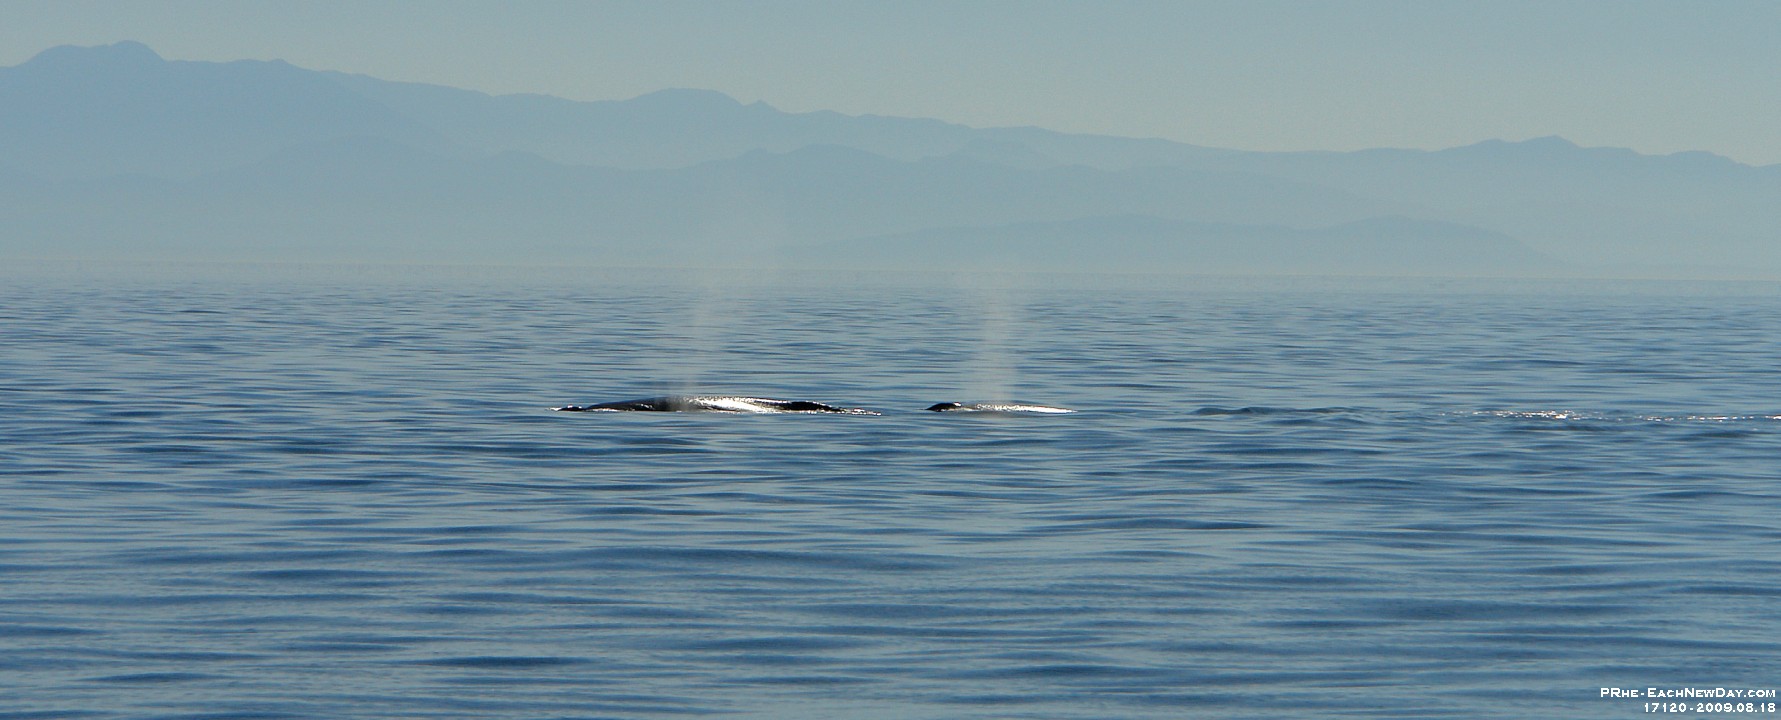 17120CrLeSh - Whale watching, Victoria